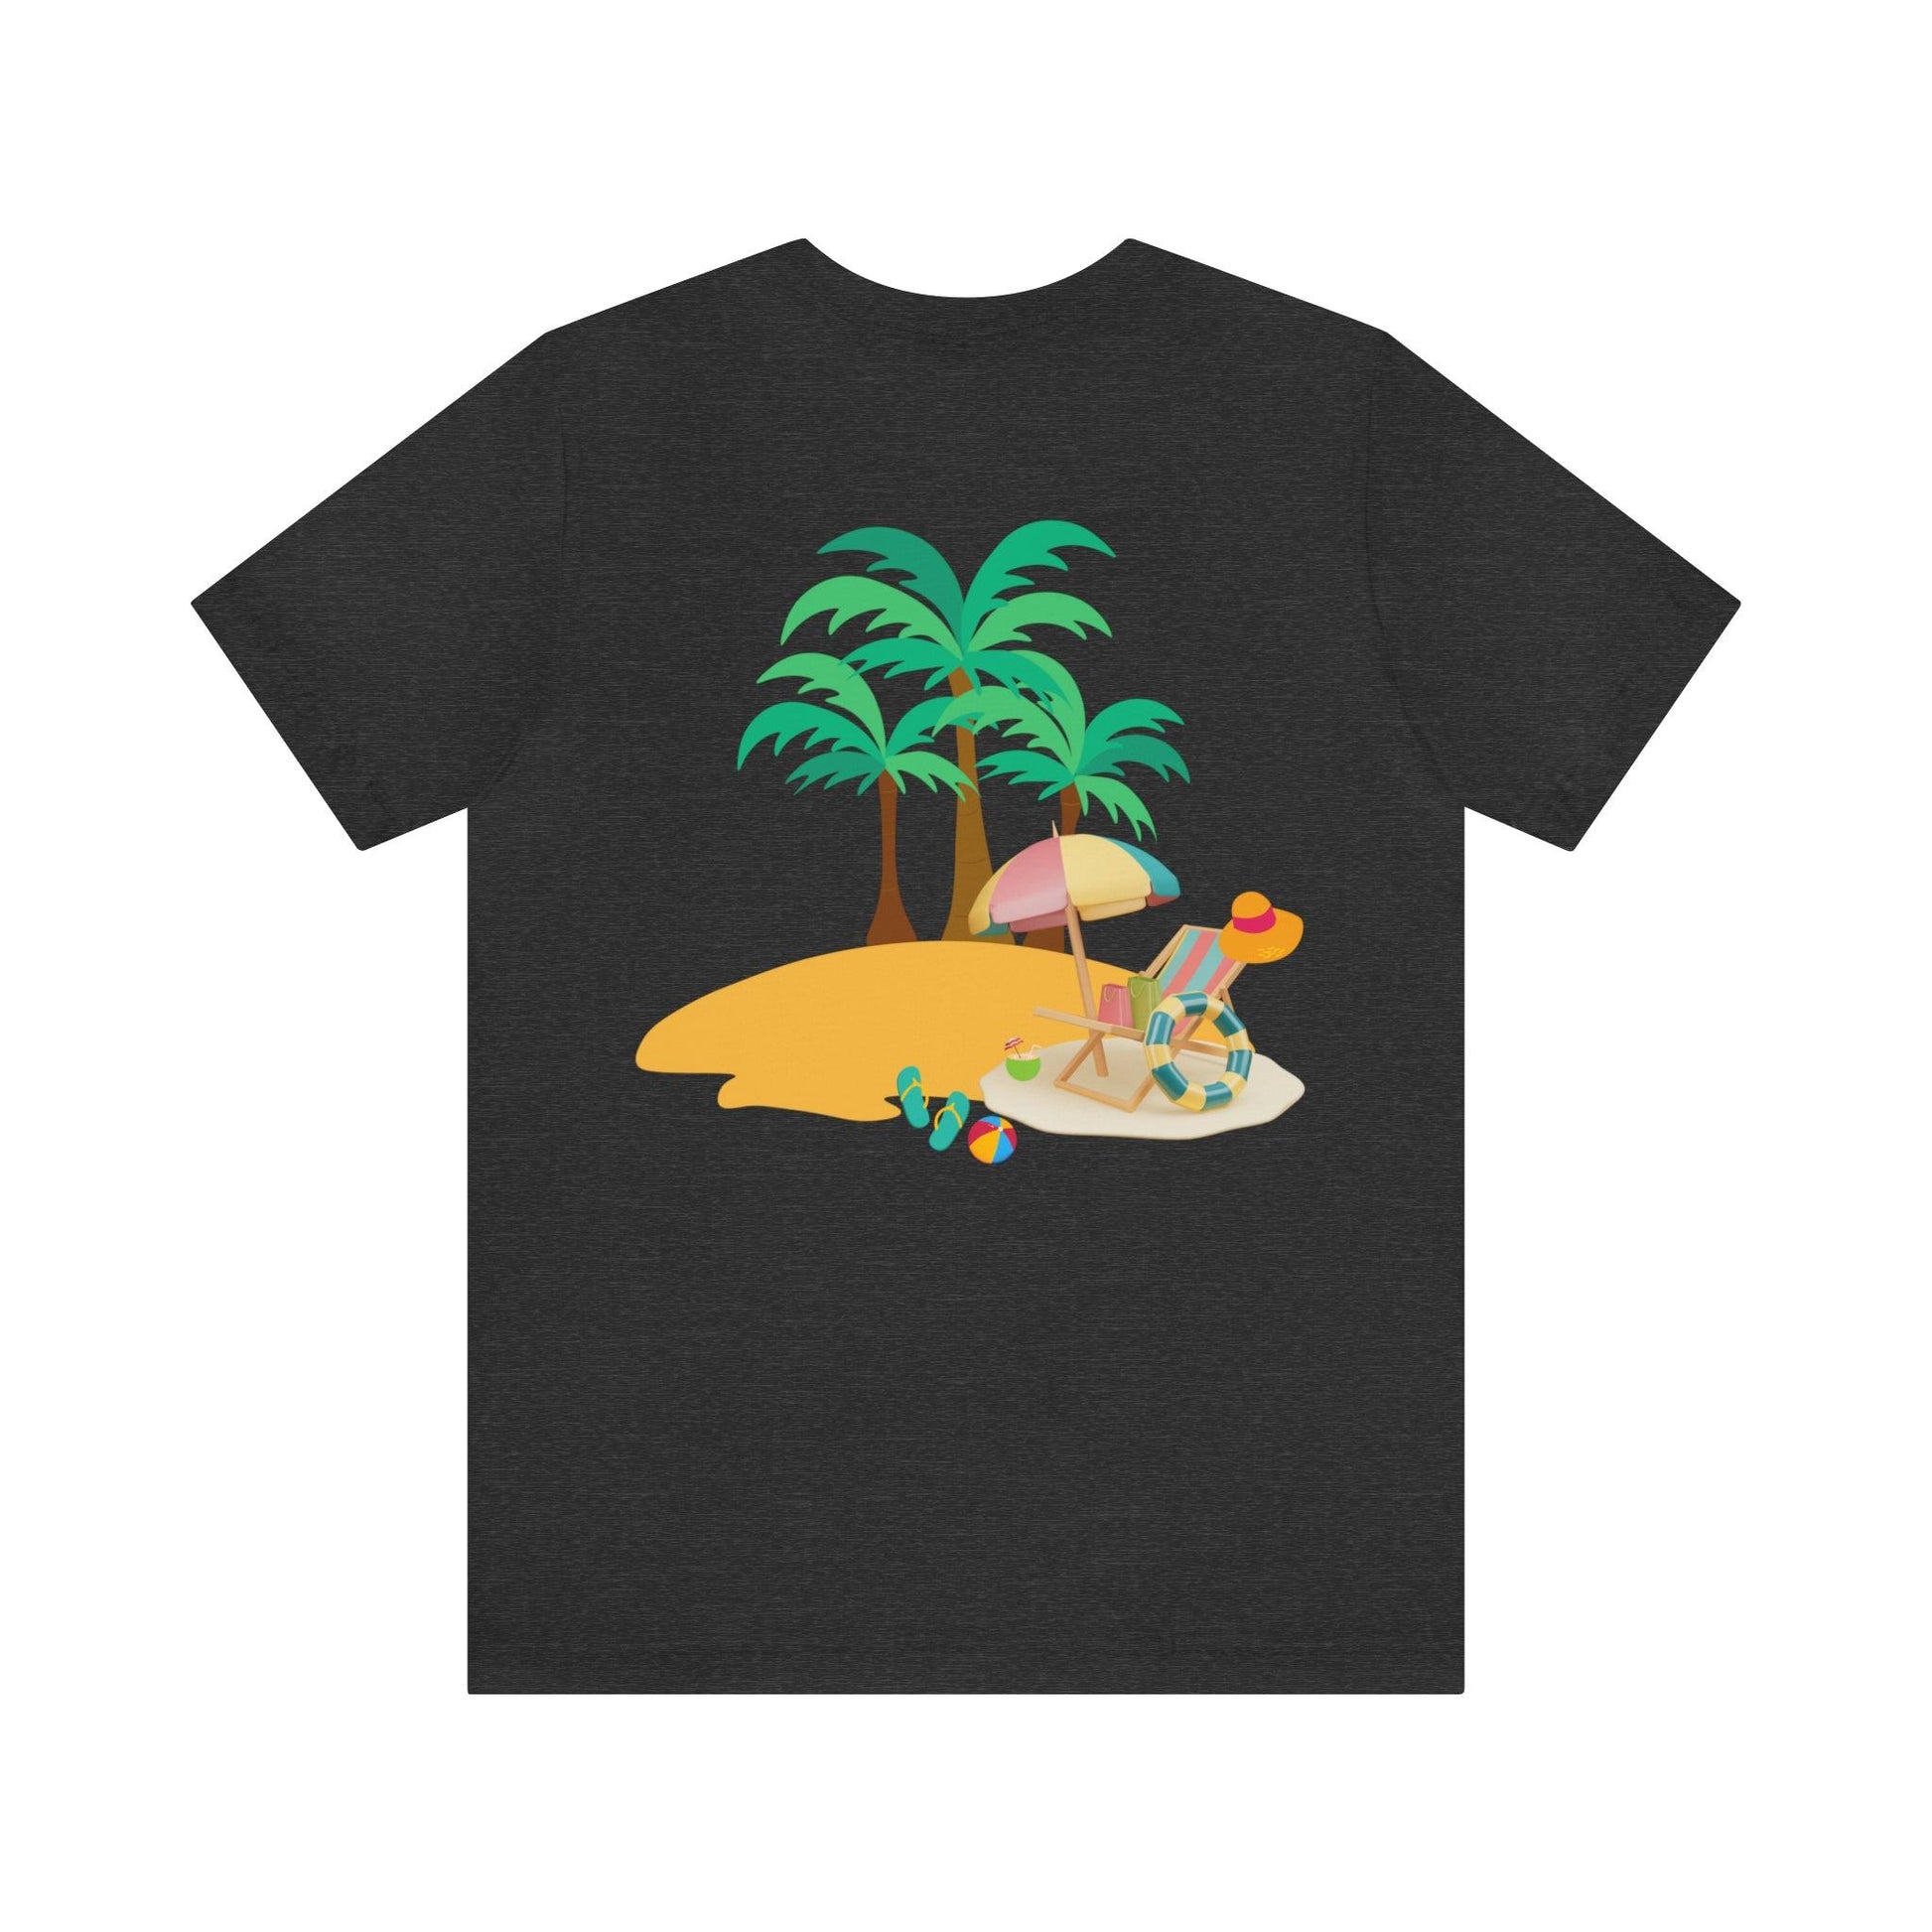 Beach shirt, summer shirts for women, beach shirts for women, beach shirts for men, beach shirts funny, summer shirts aesthetic - Giftsmojo